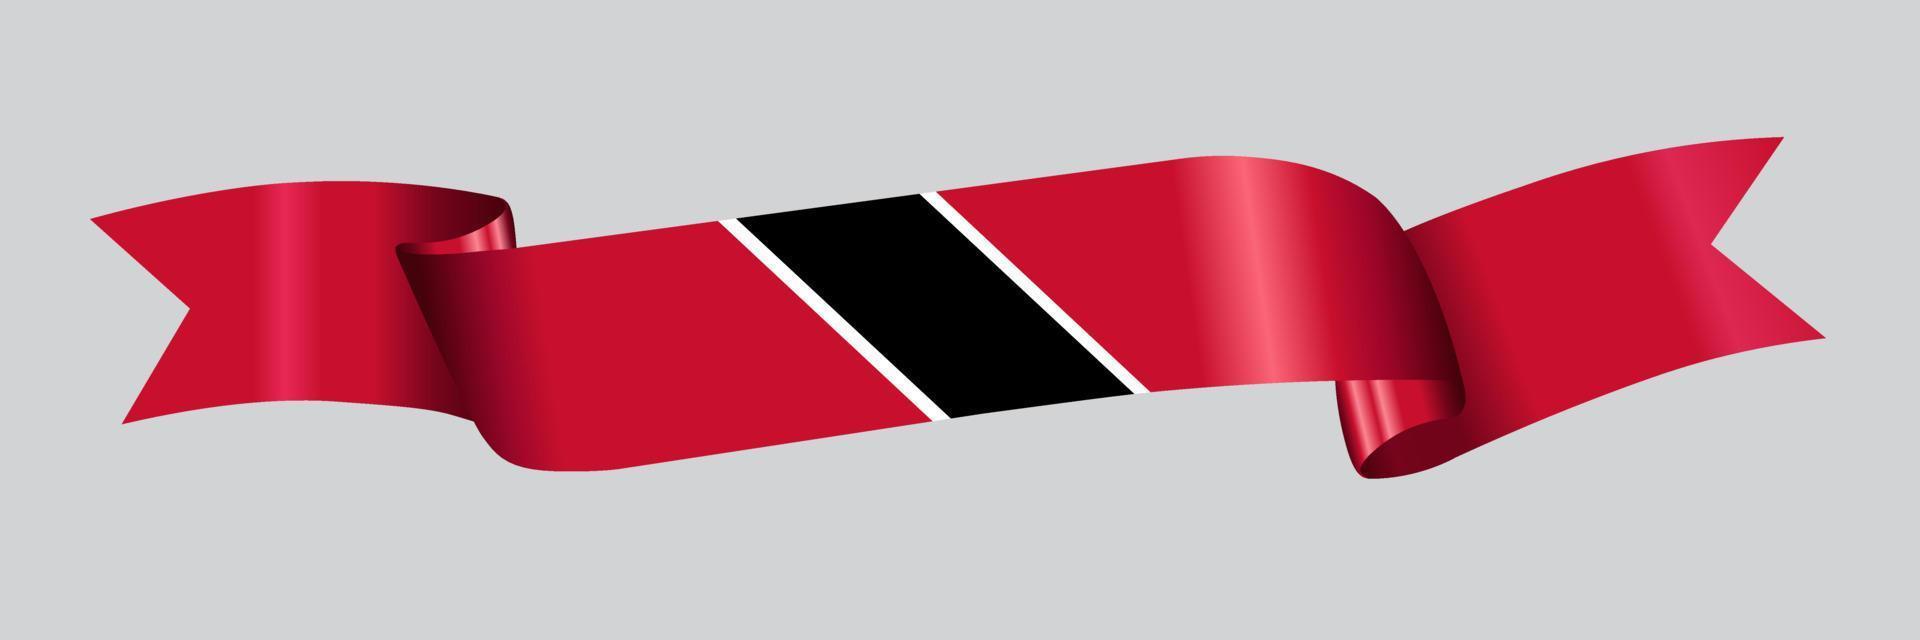 3D Flag of Trinidad and Tobago on ribbon. vector